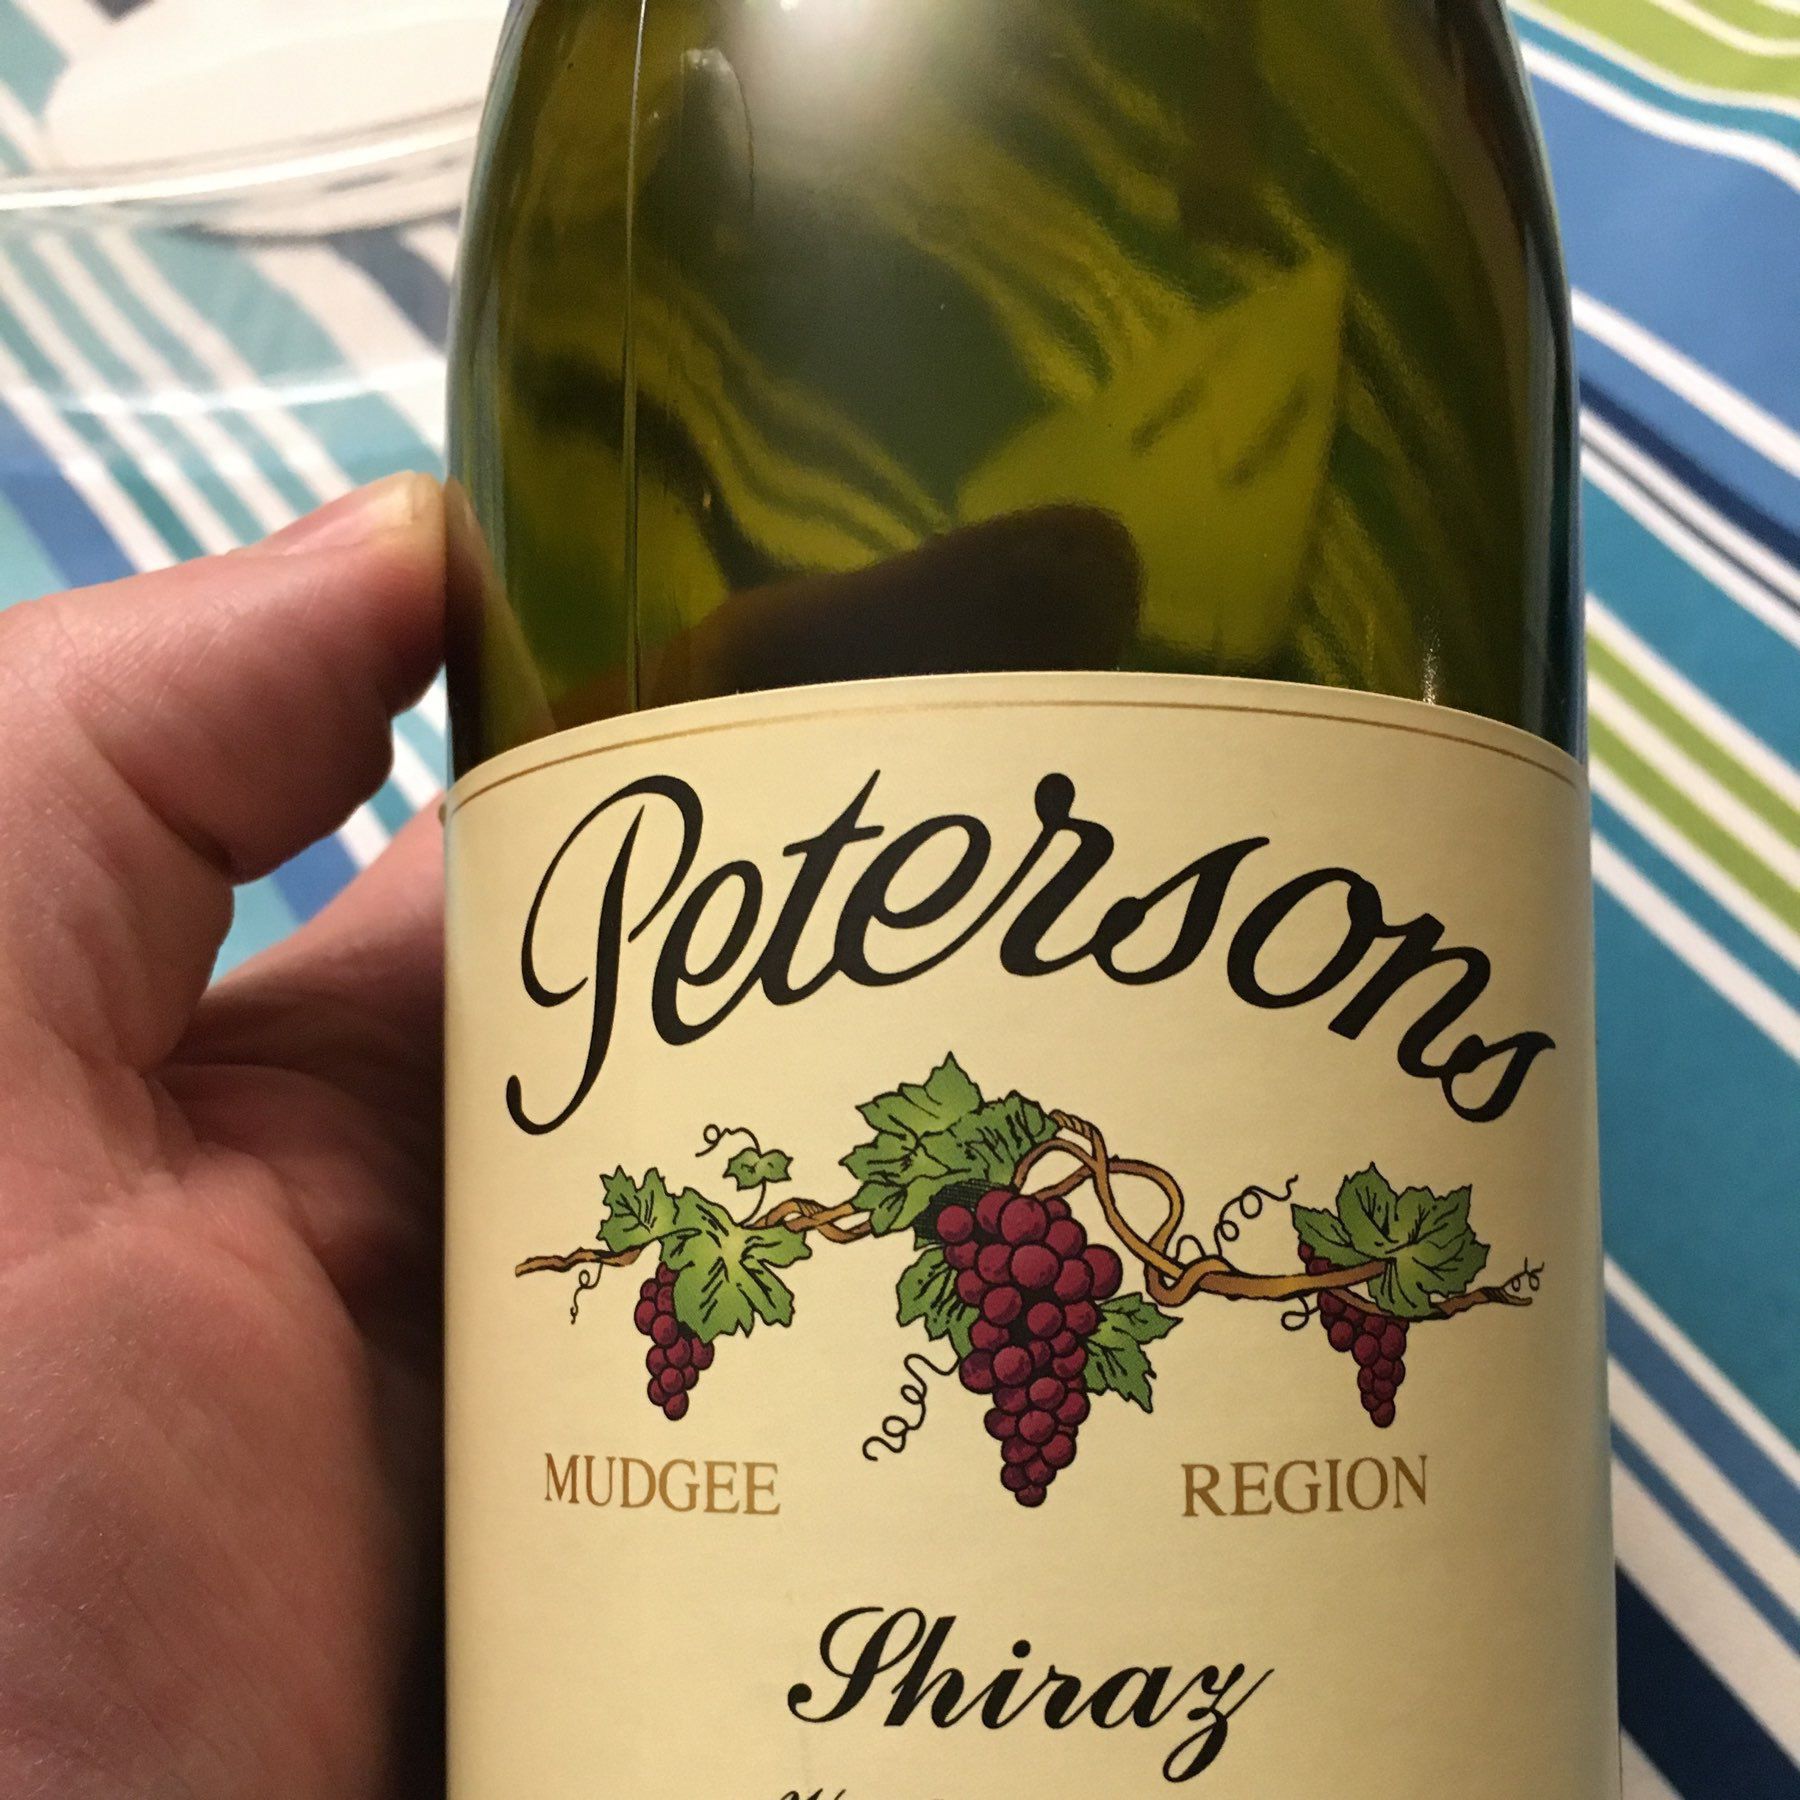 Peterson's shiraz wine bottle